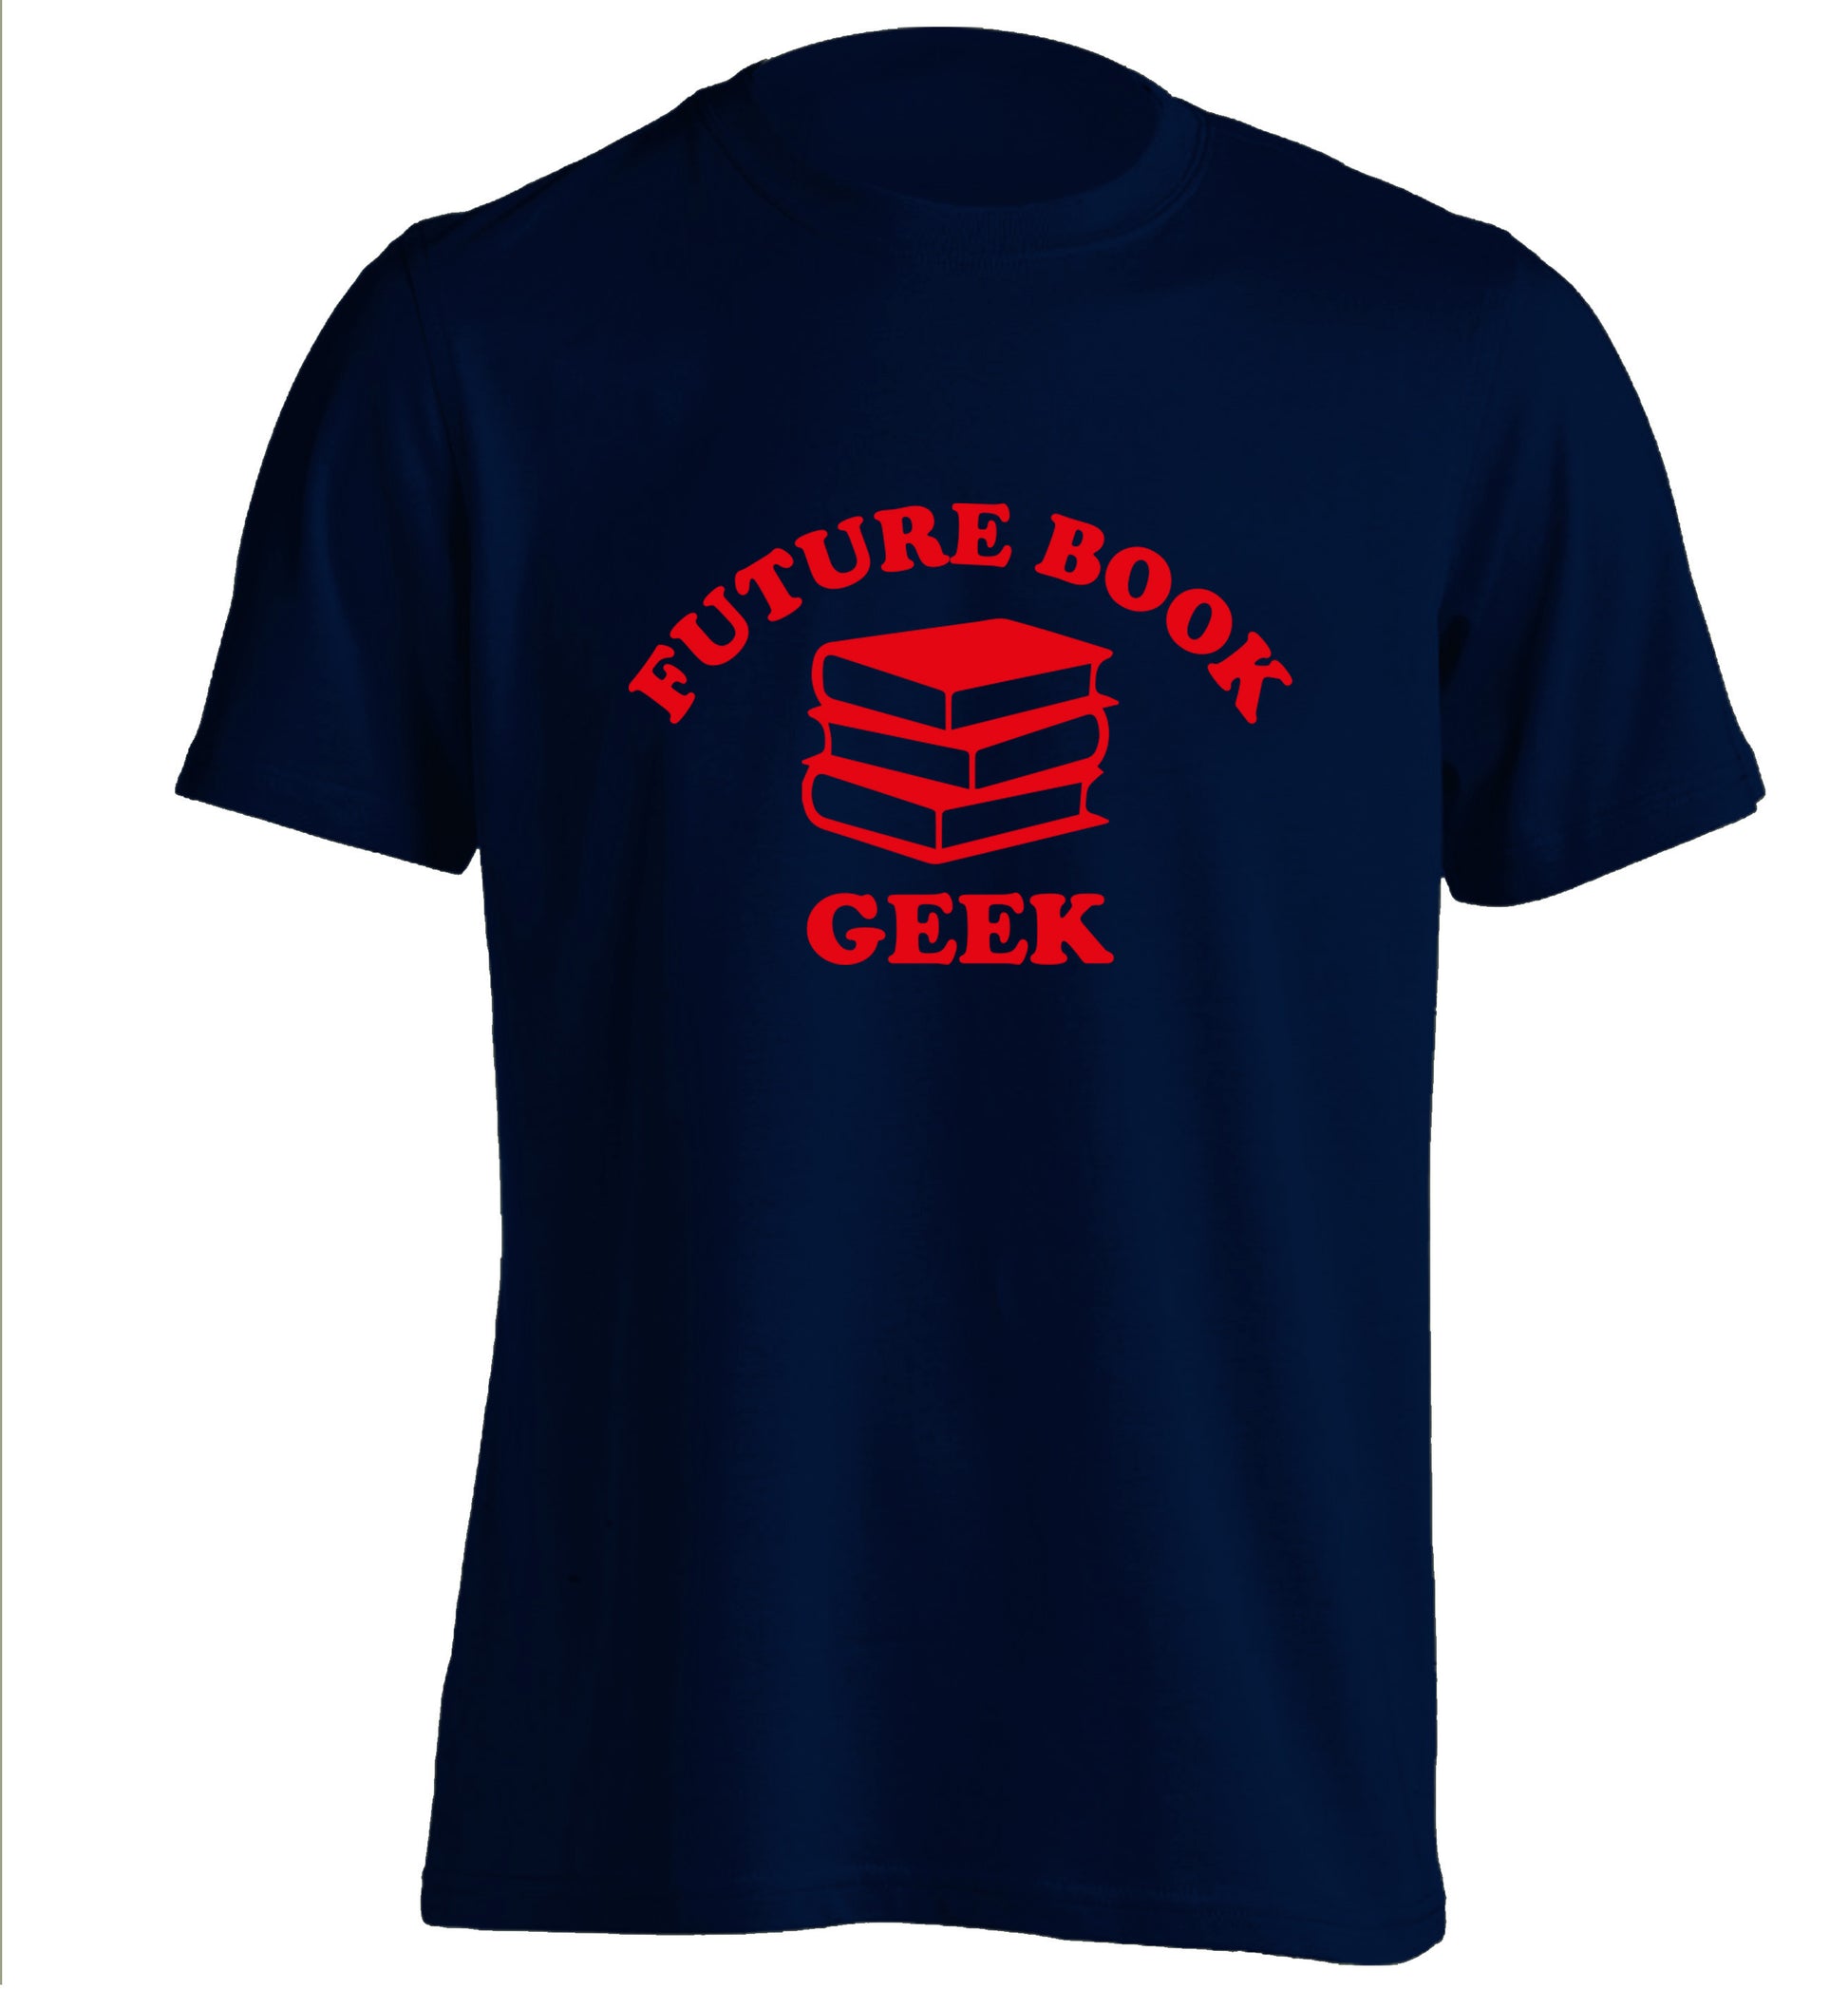 Future book geek adults unisex navy Tshirt 2XL